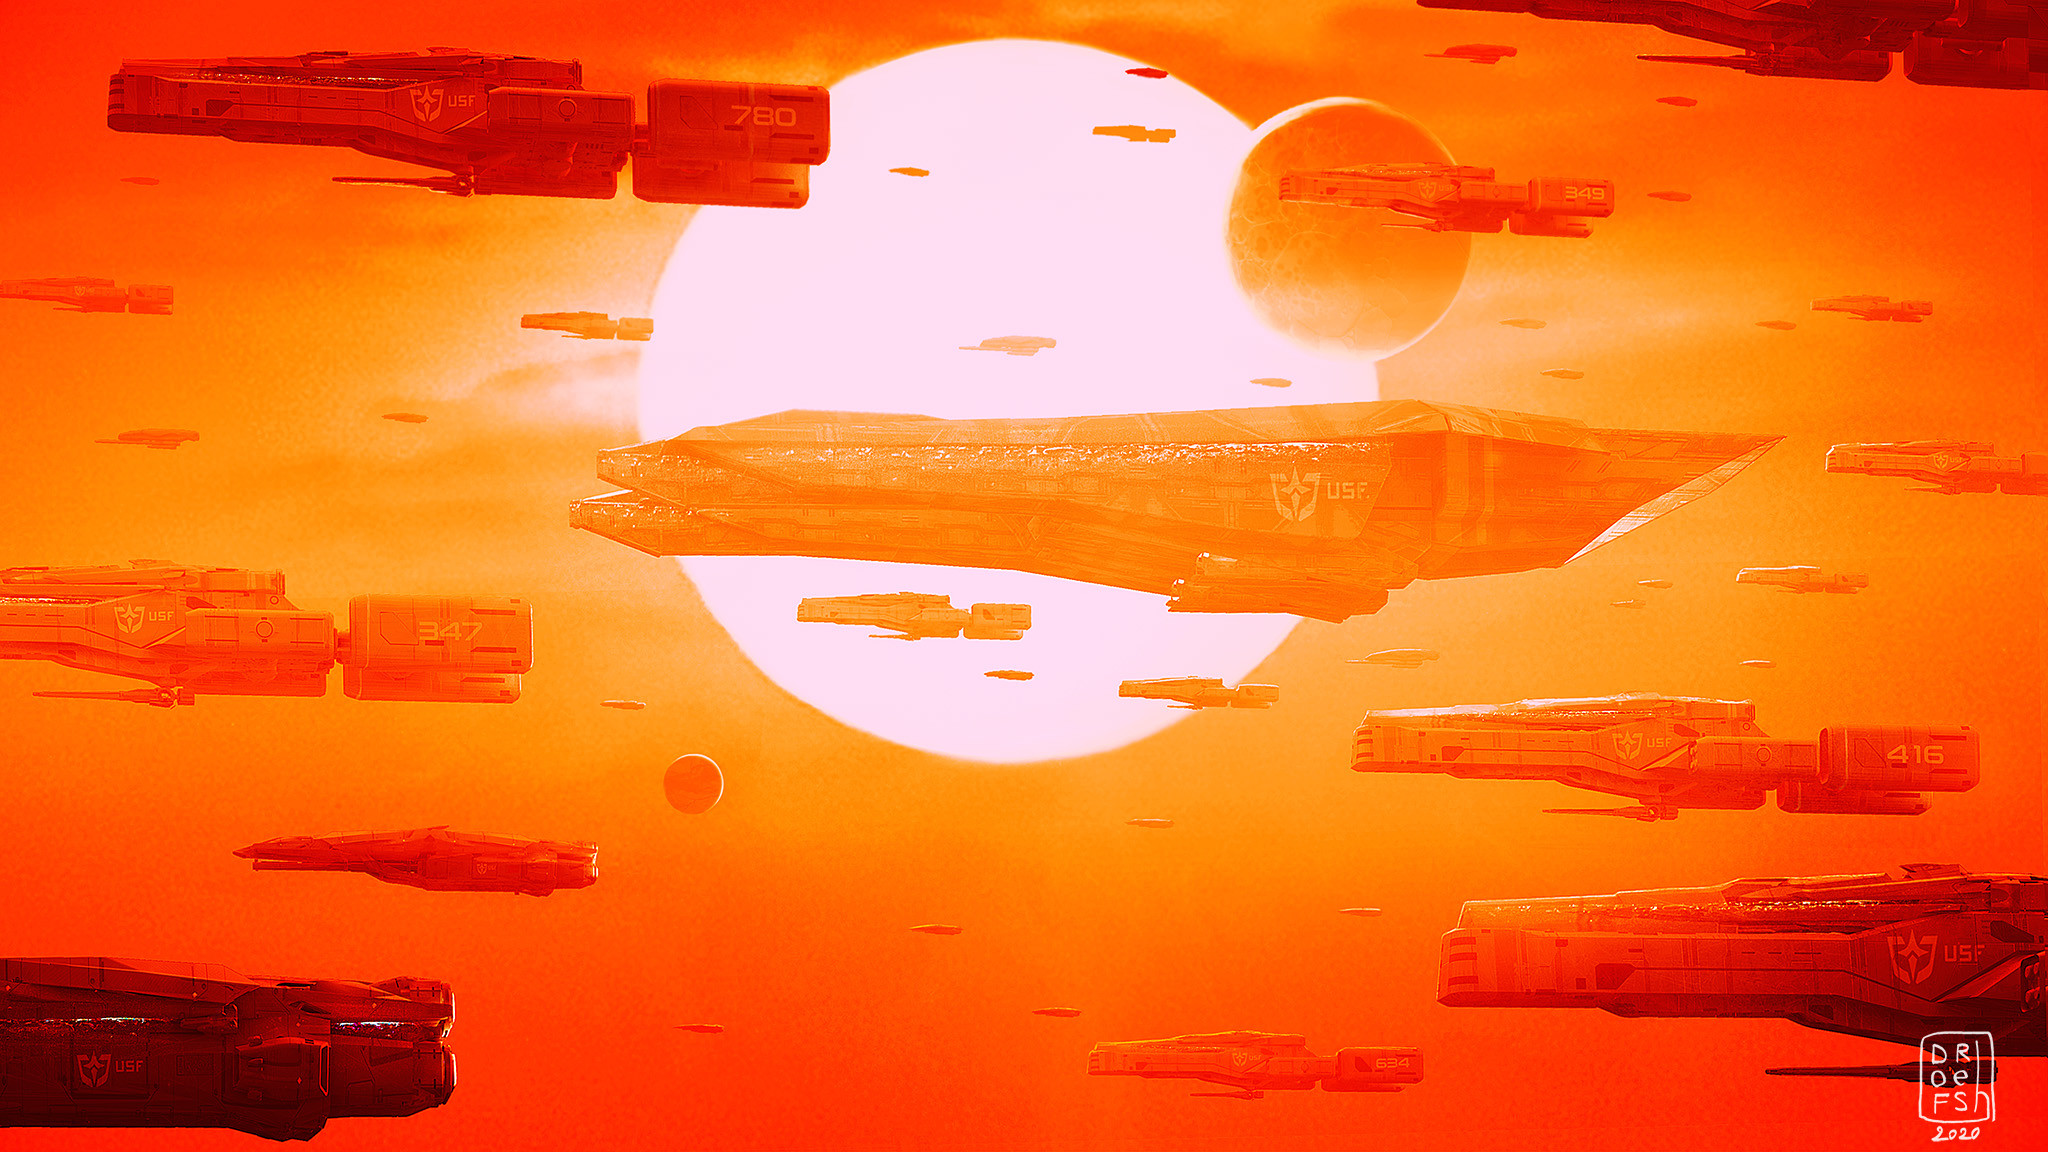 General 2048x1152 artwork science fiction spaceship vehicle Sun futuristic 2020 (Year)